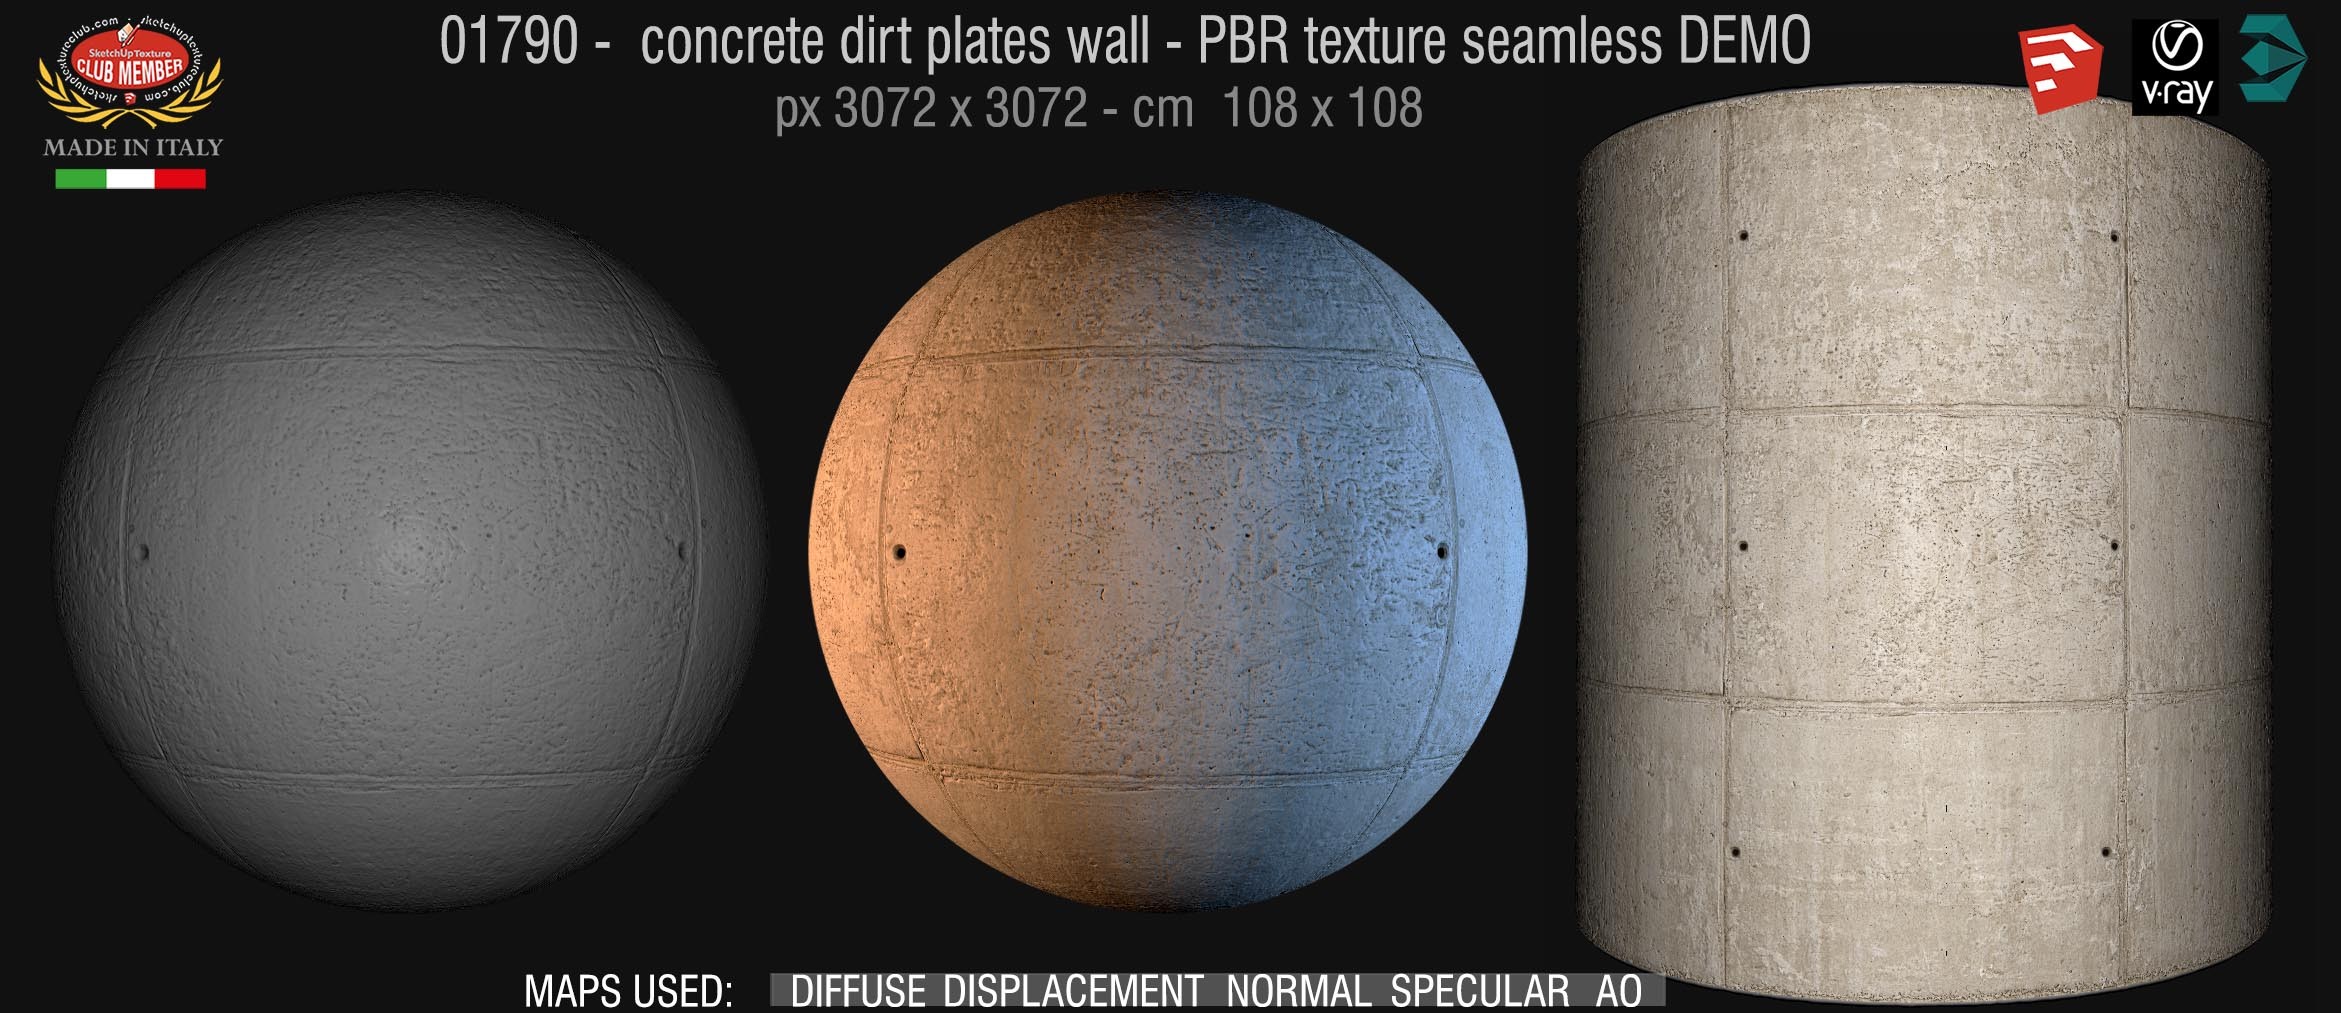 01790 concrete dirt plates wall PBR texture seamless DEMO